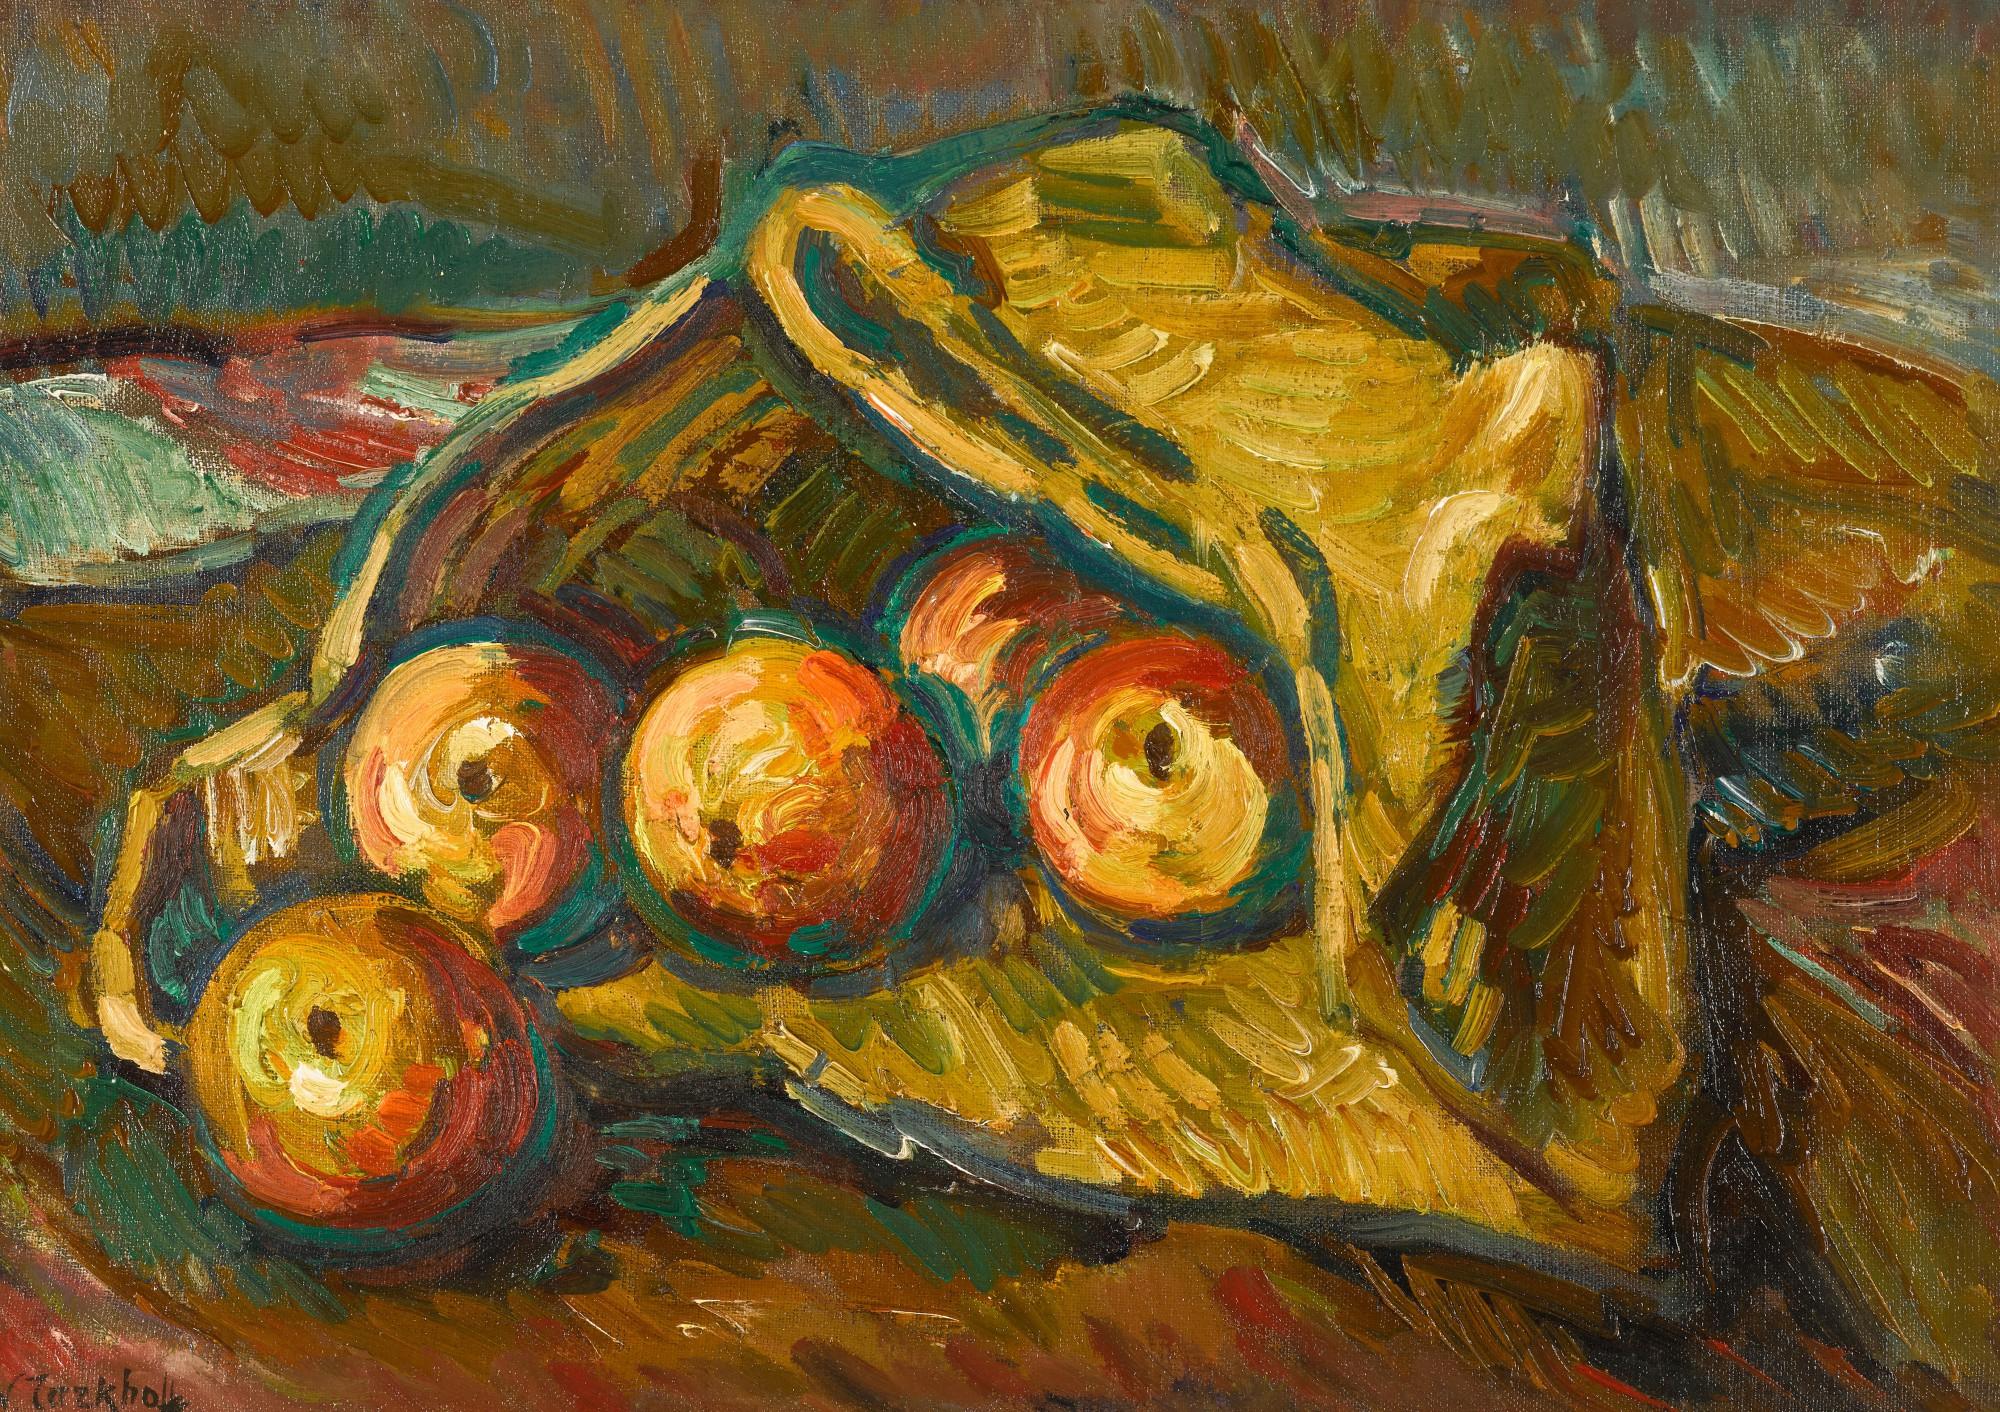 https://www.art.salon/images/nikolai-alexandrovich-tarkhov_still-life-with-apples_AID516688.jpg?f=grey